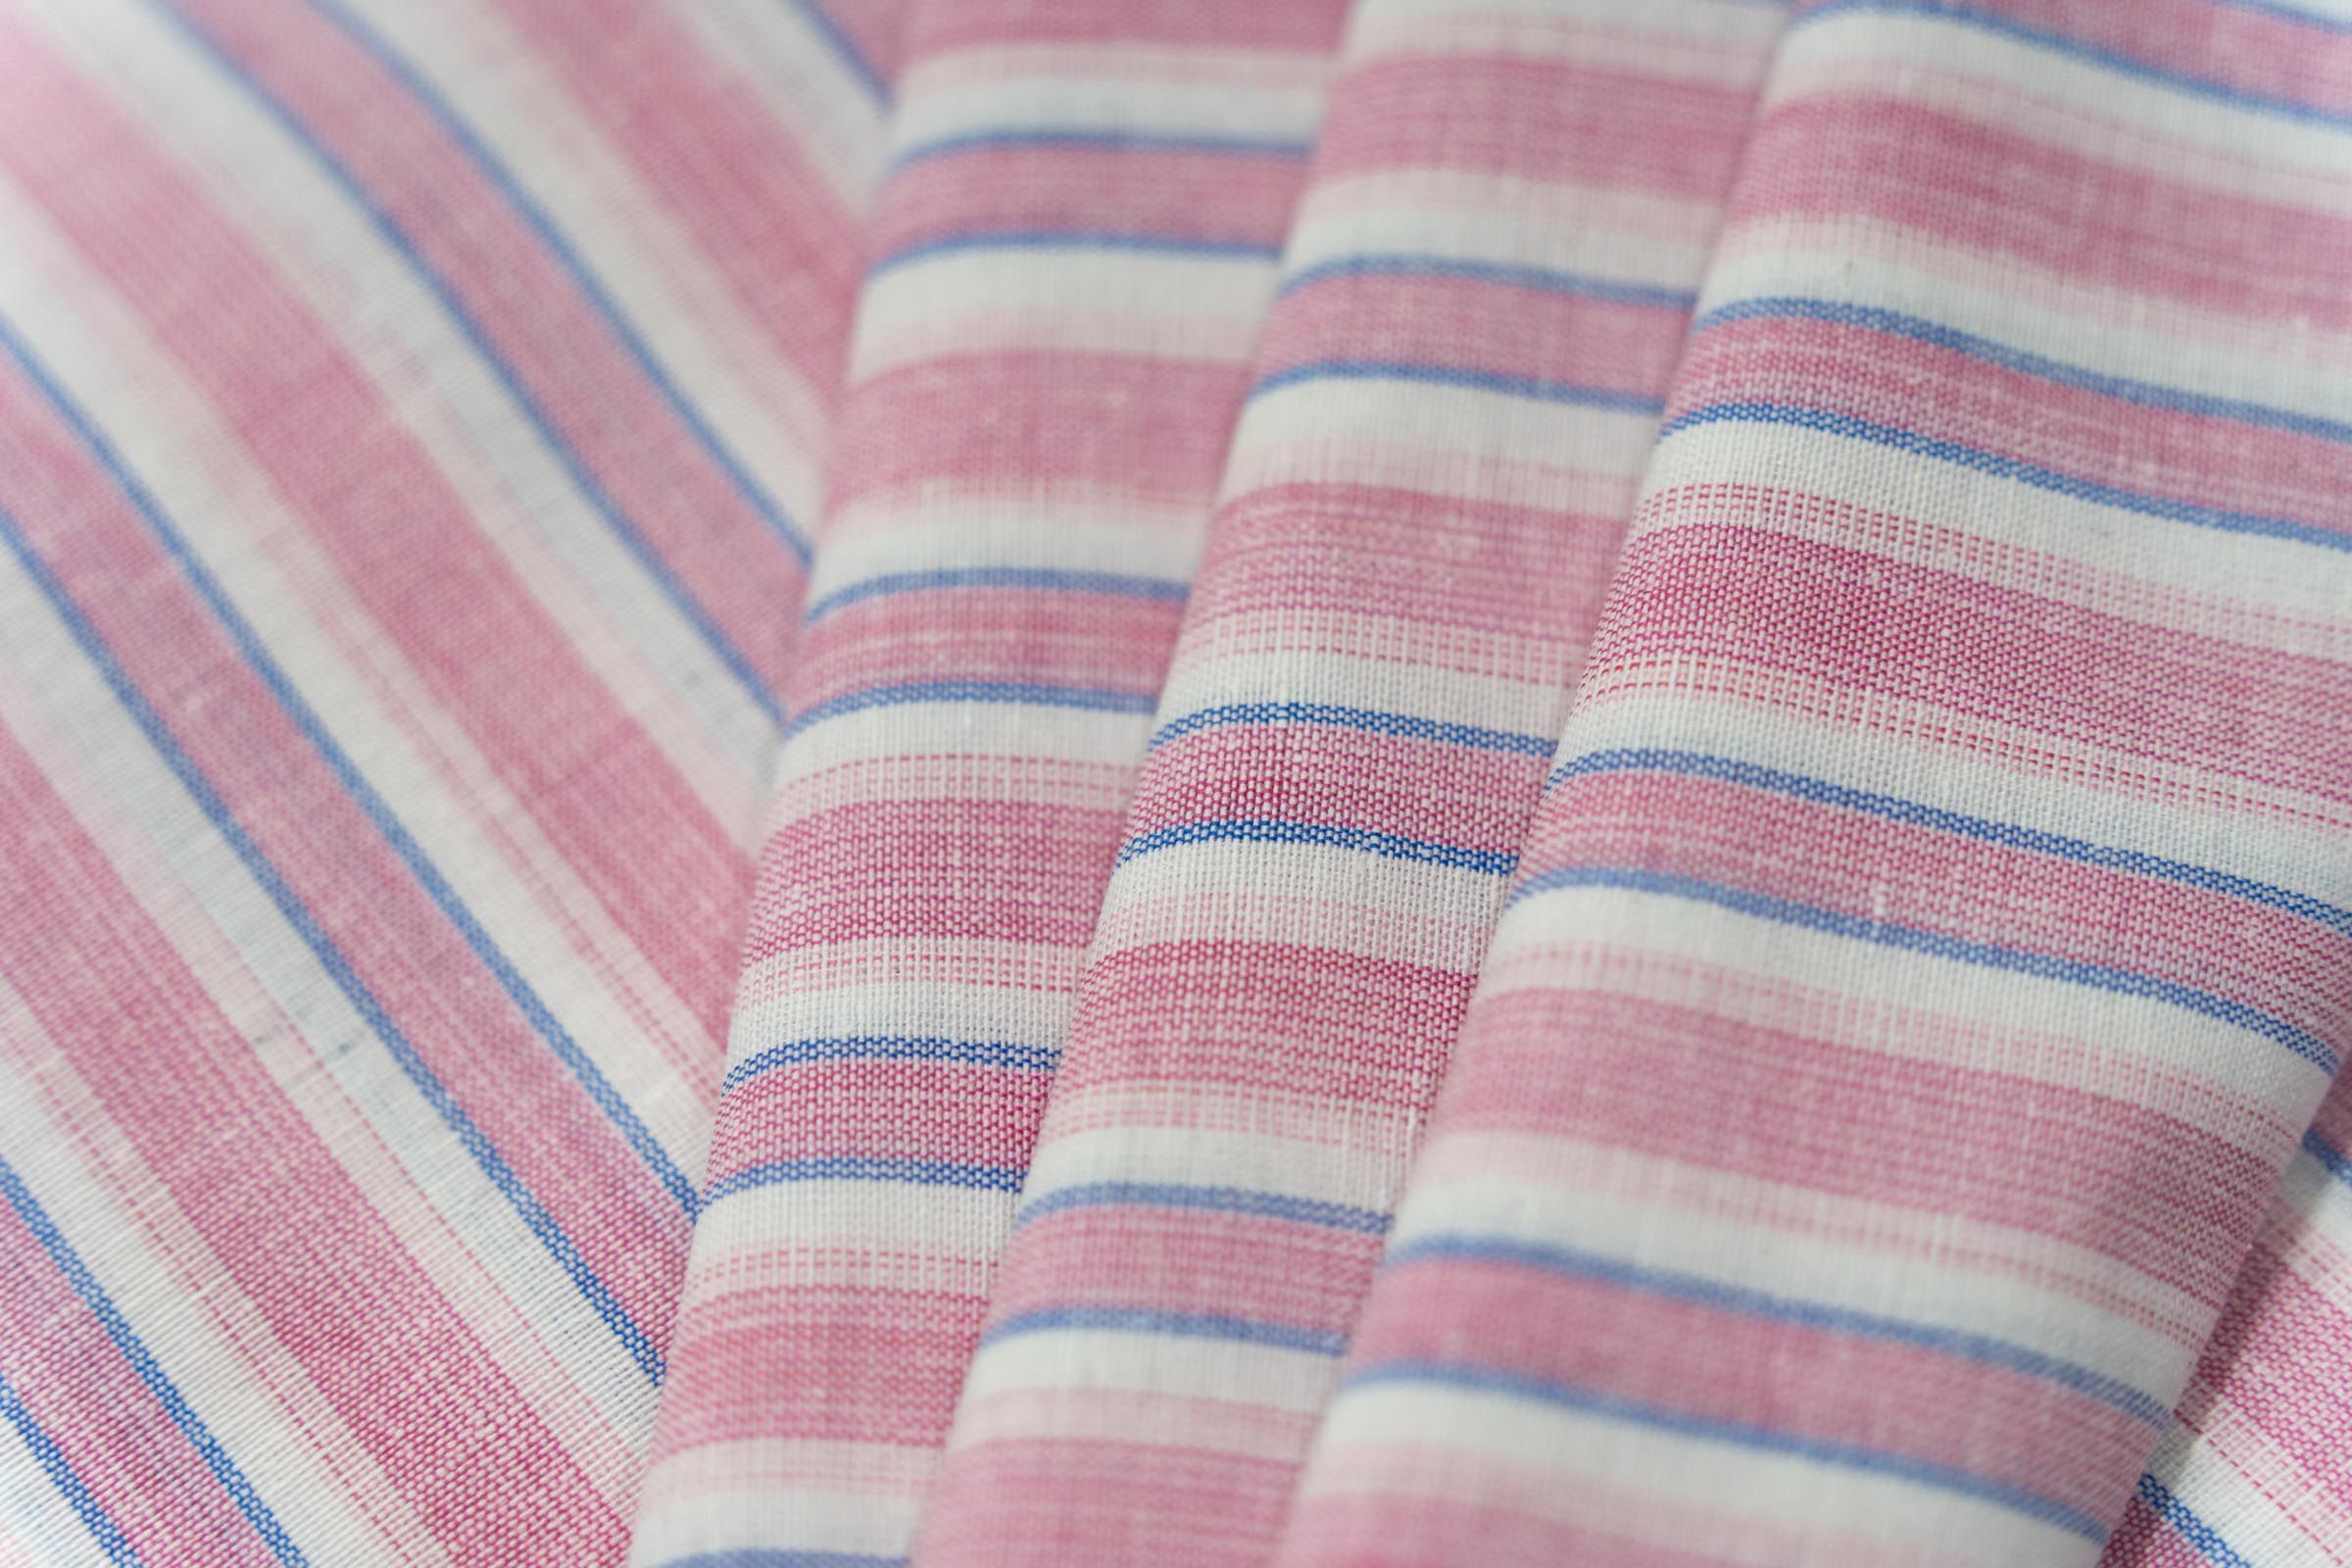 Pink Striped Powerloom Khari Cotton Fabric